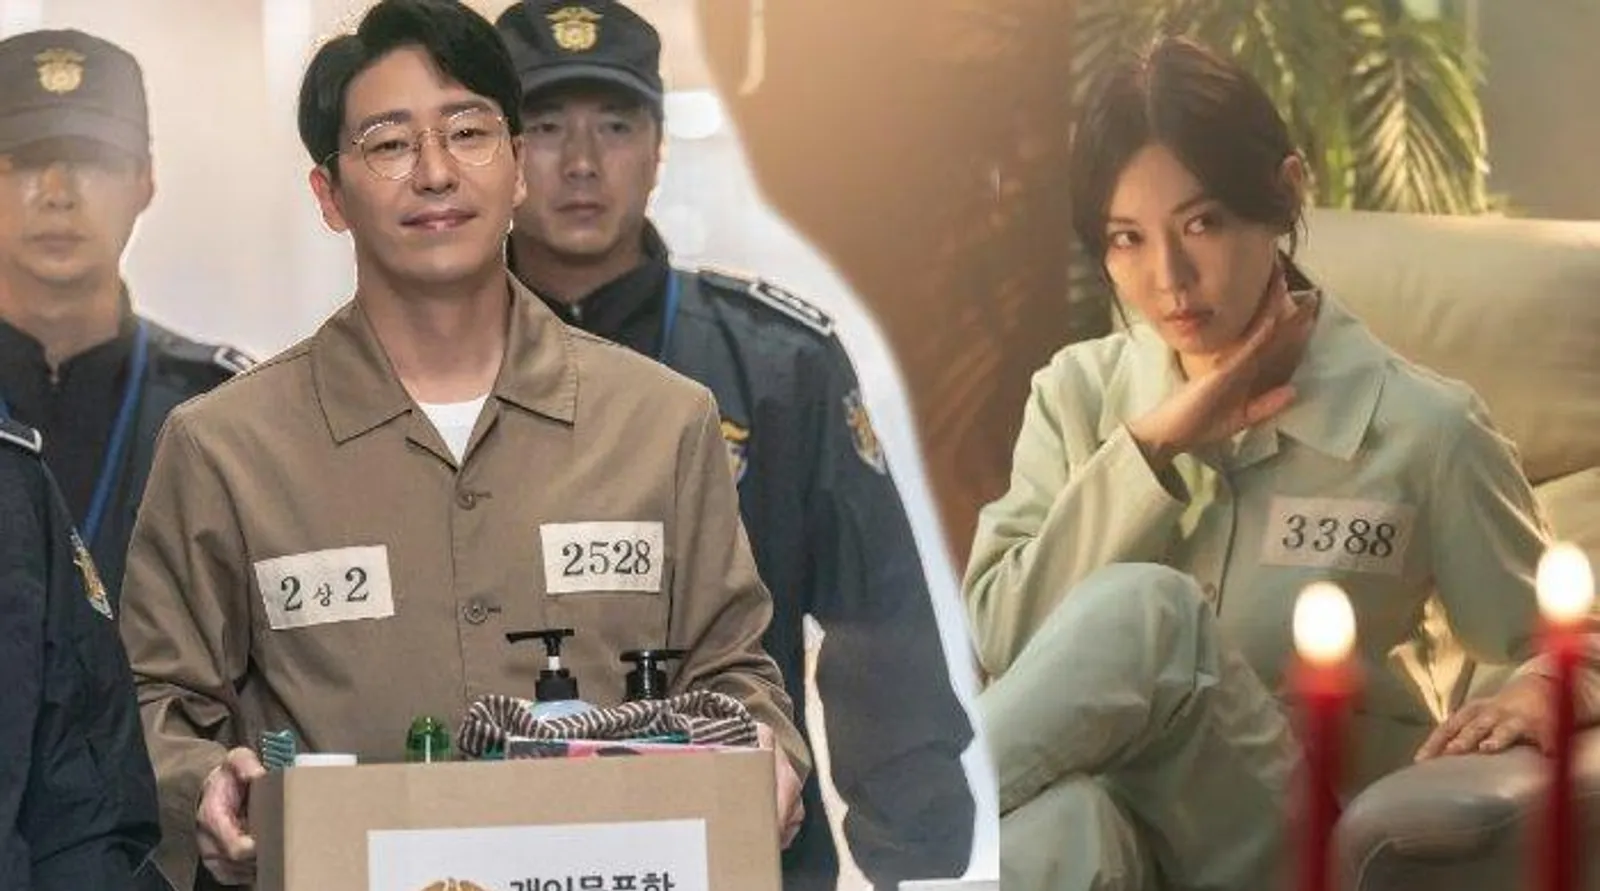 Konfliknya Rumit, Inilah 5 Drama Korea Rasa Sinetron